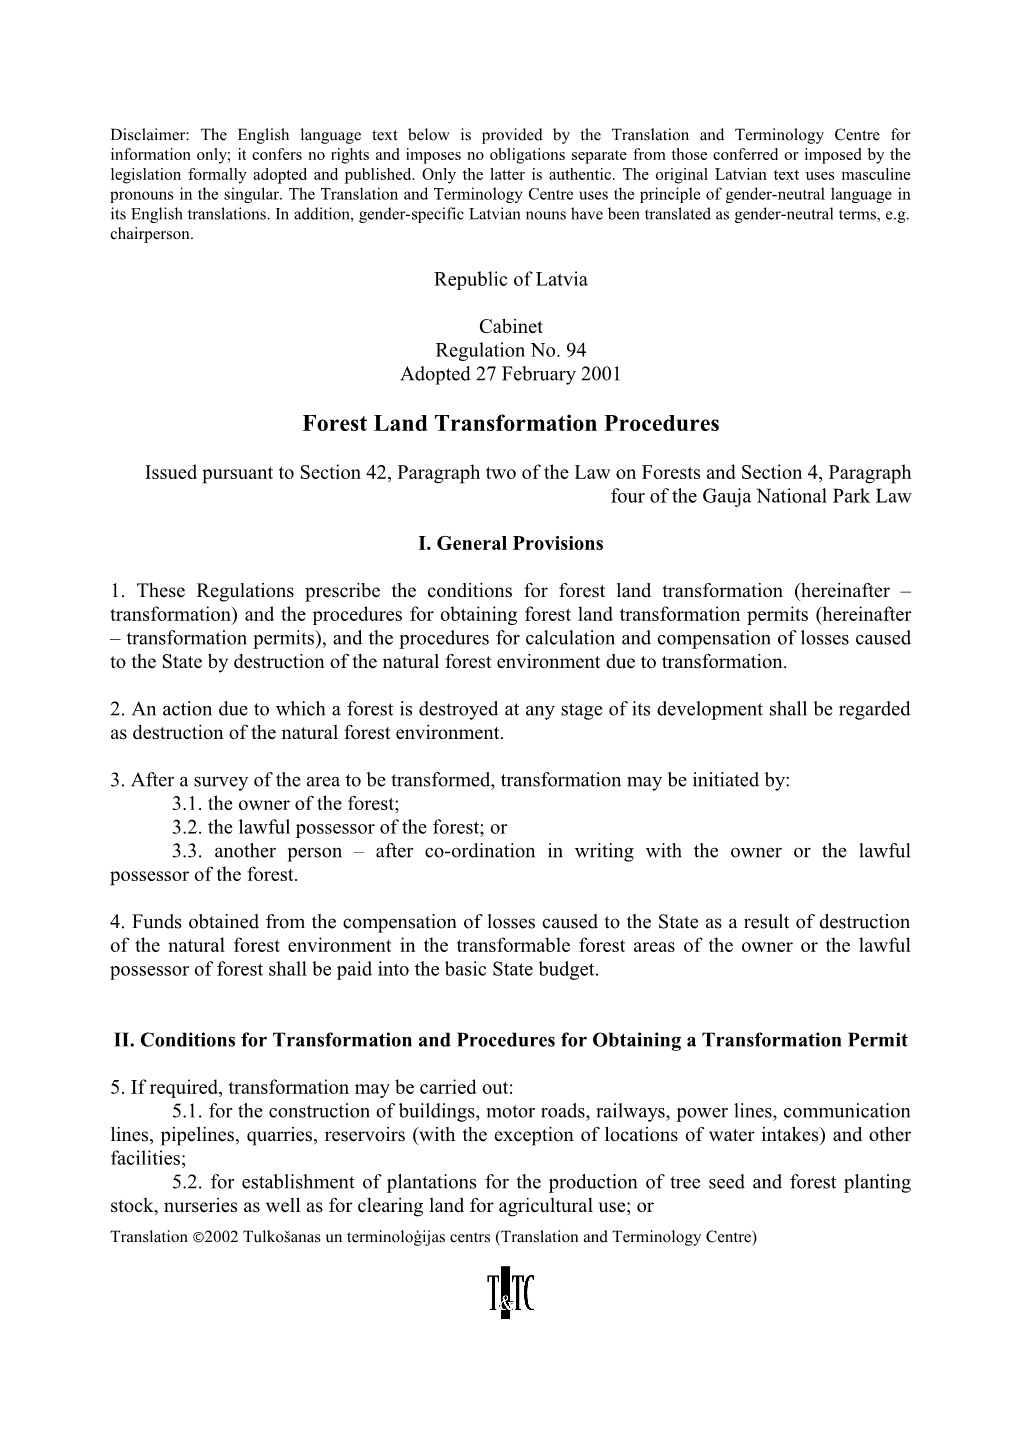 Forest Land Transformation Procedures